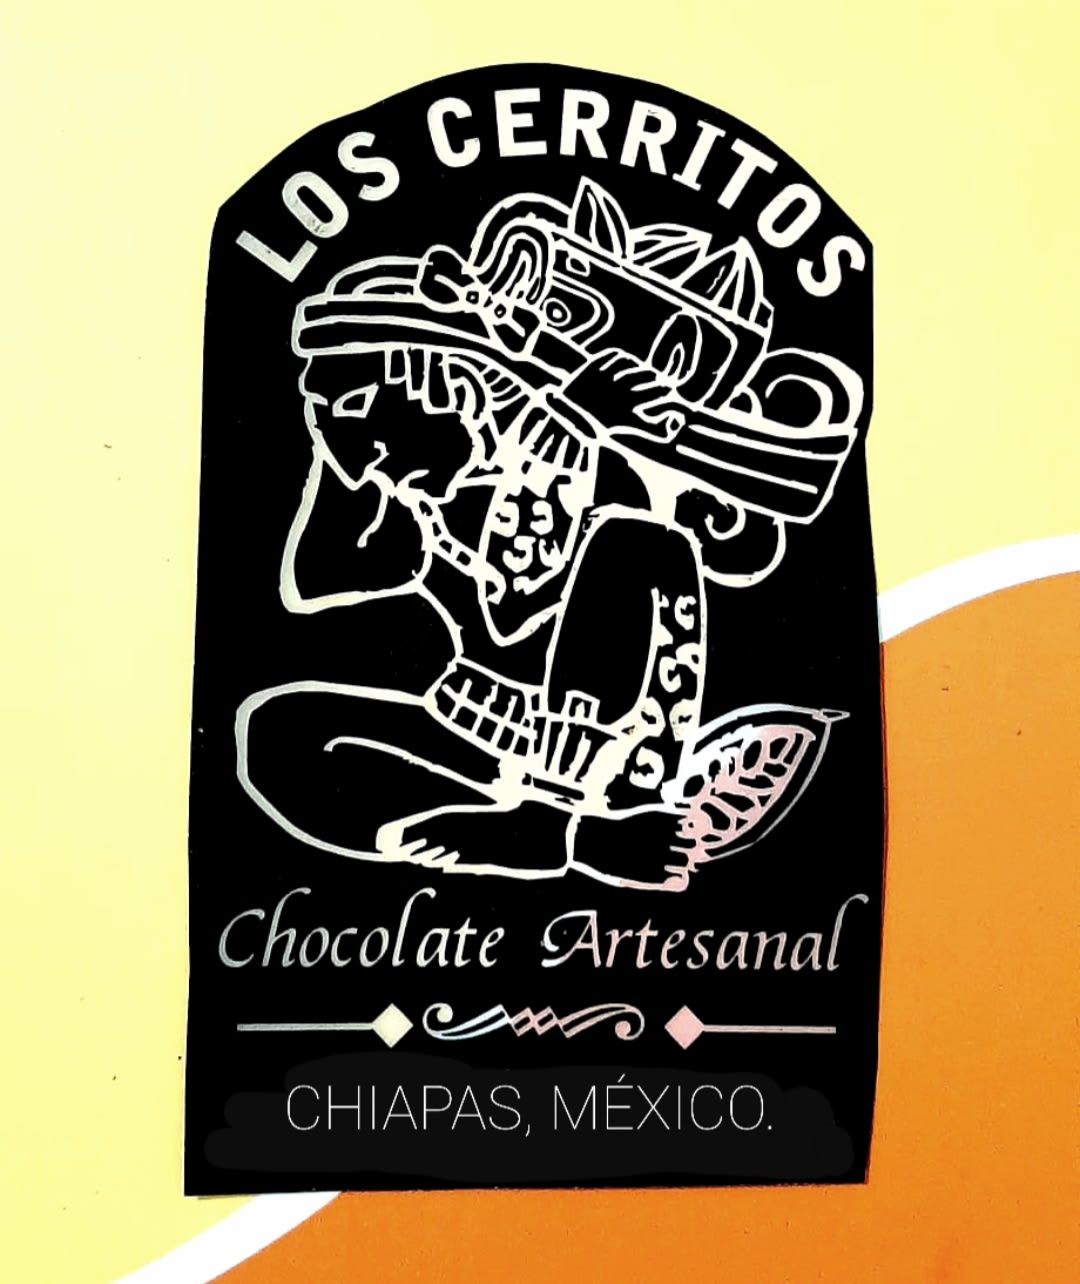 Los Cerritos Chocolate Artesanal